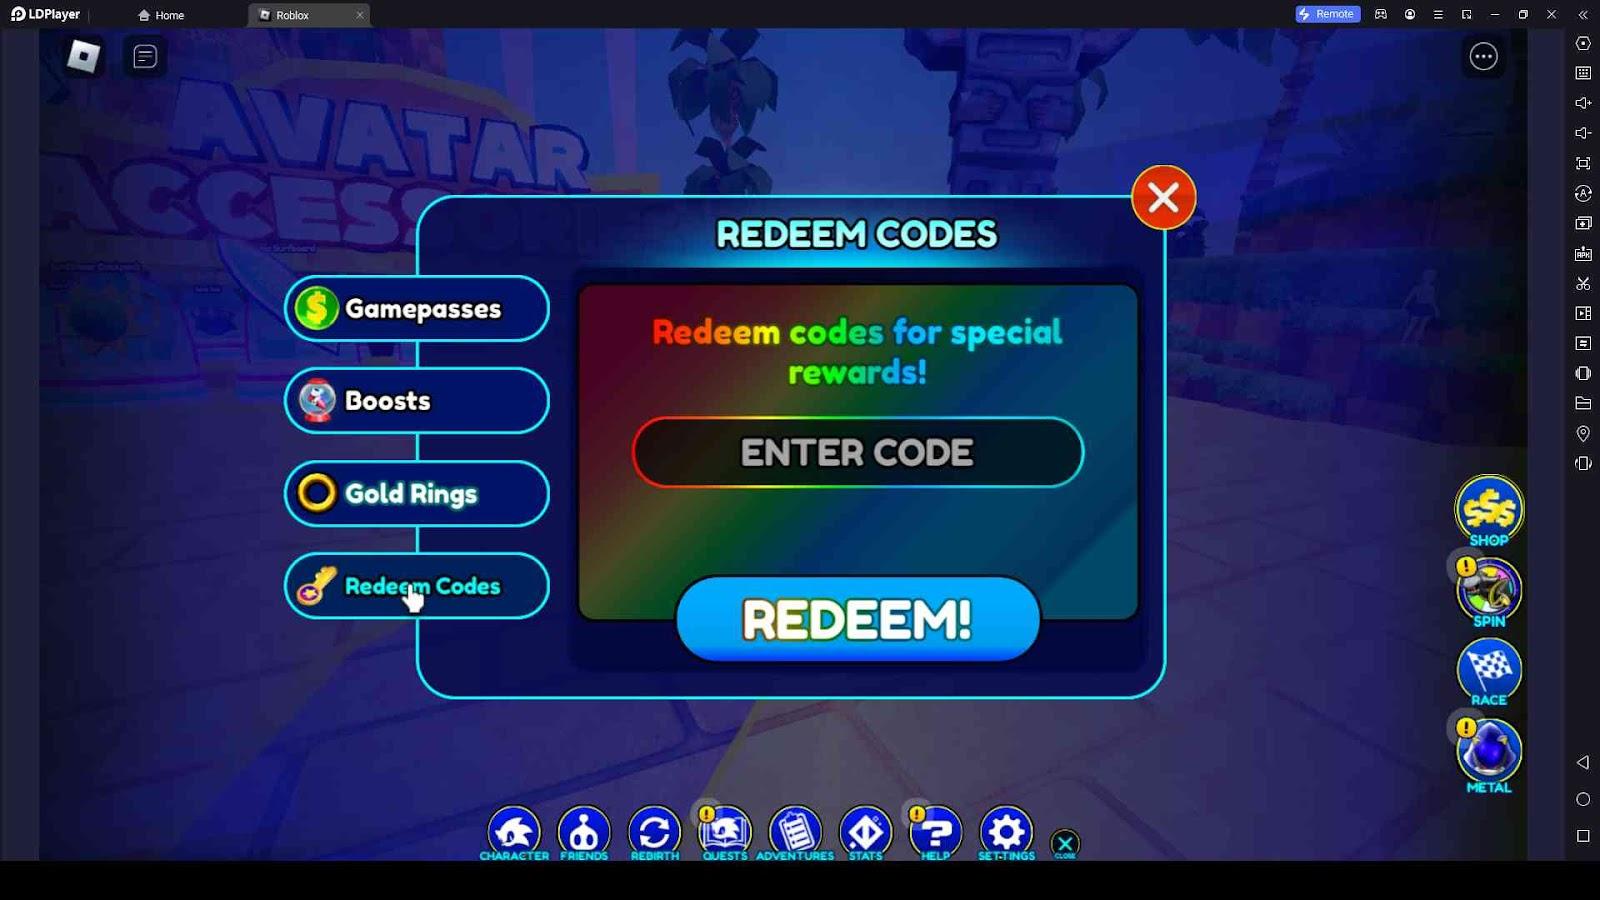 Sonic Speed Simulator Codes (December 2023) - Roblox